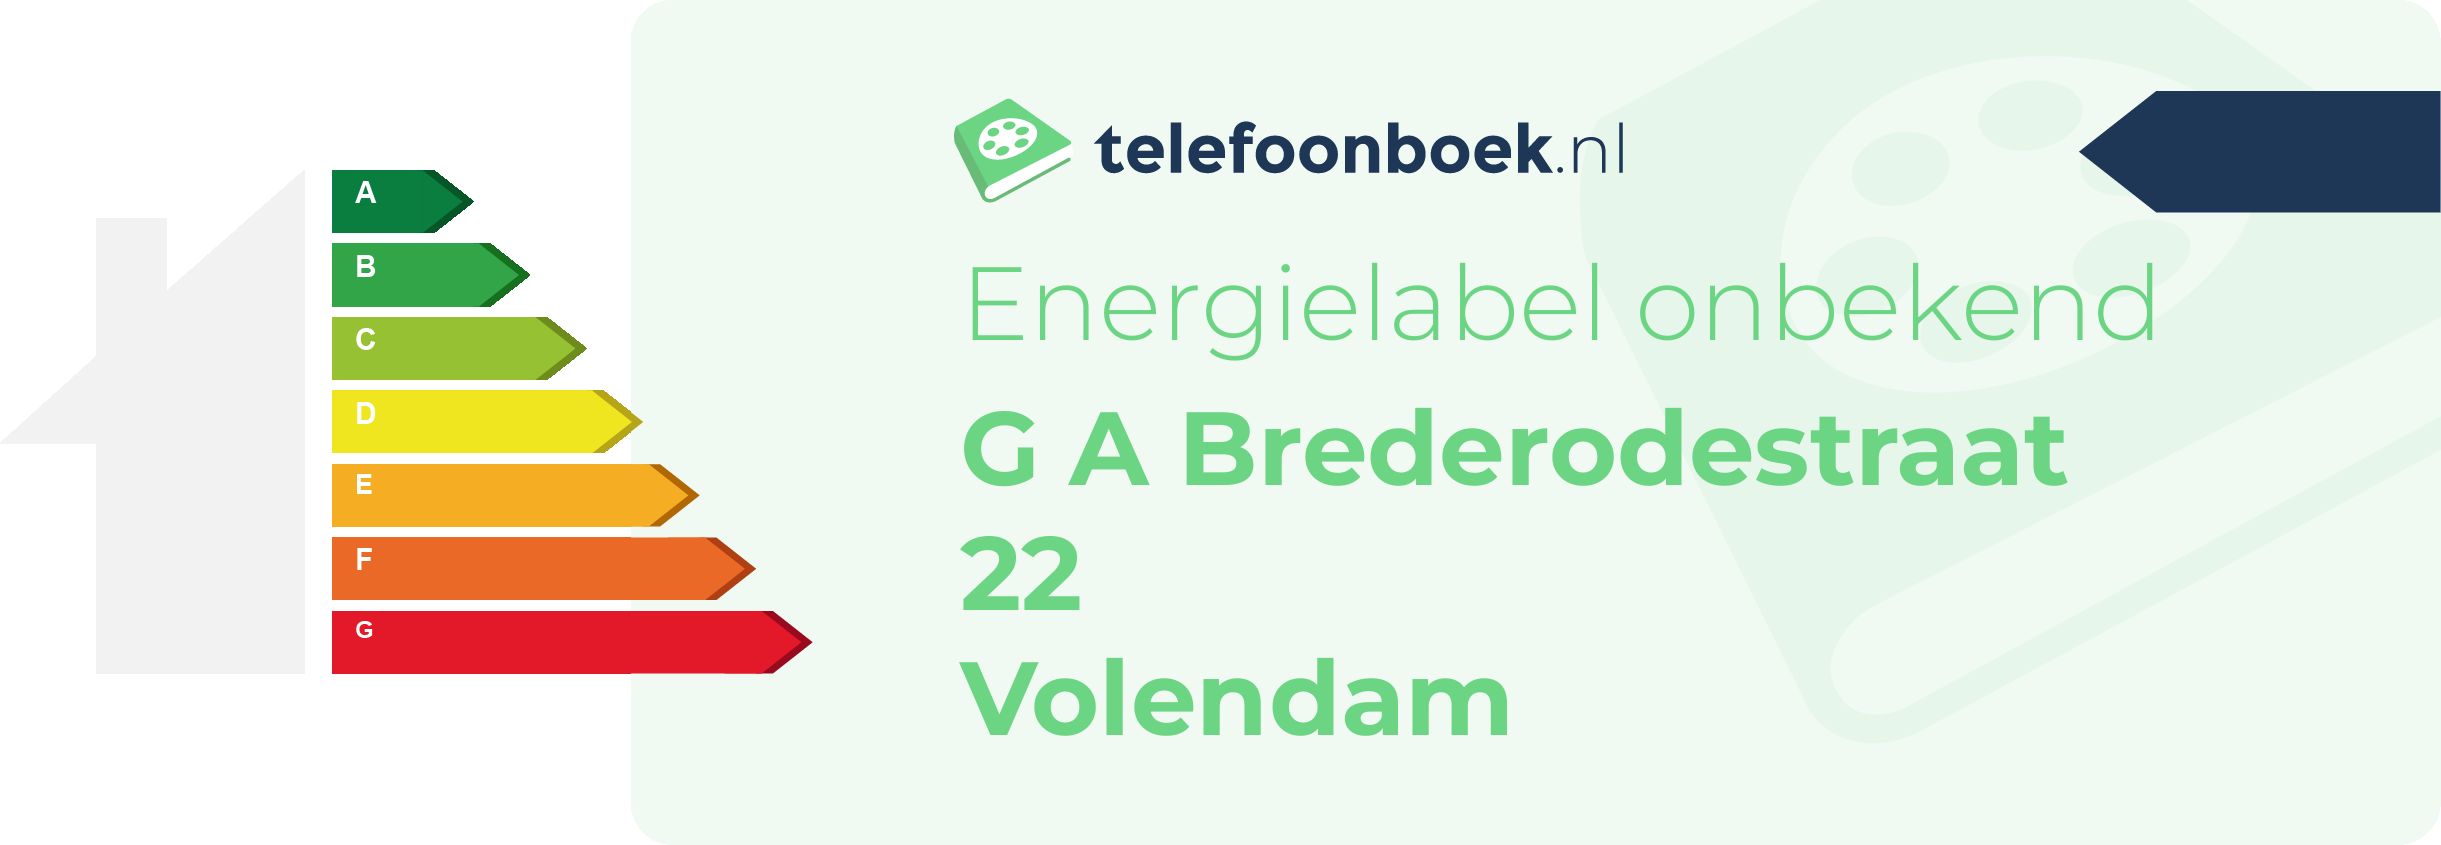 Energielabel G A Brederodestraat 22 Volendam